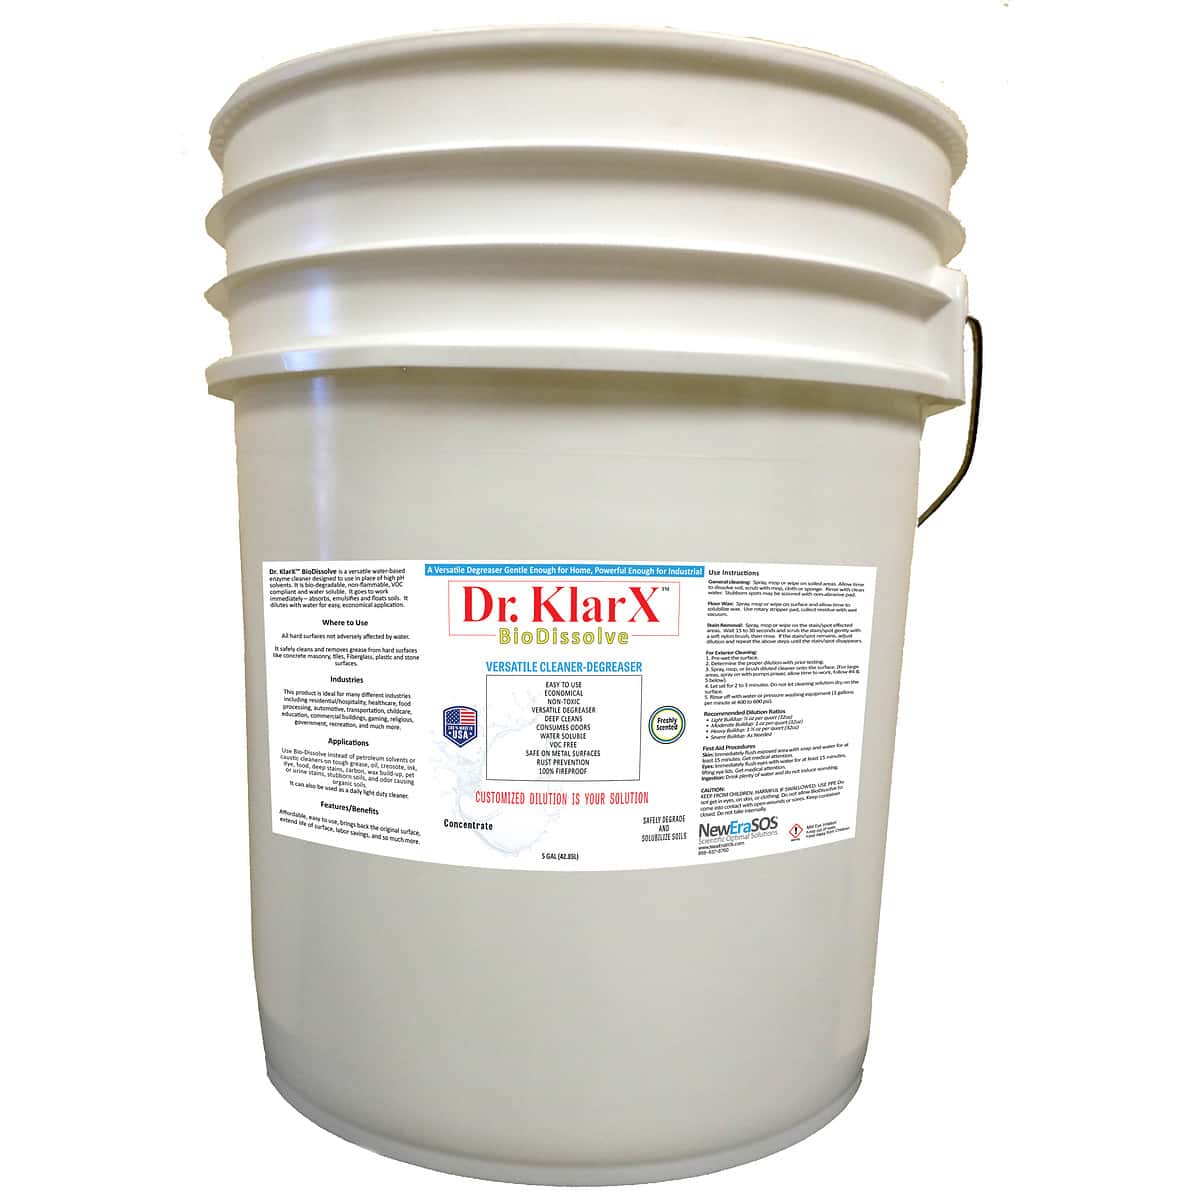 Dr. KlarX BioDissolve Versatile Cleaner and Degreaser 5-gallon pail